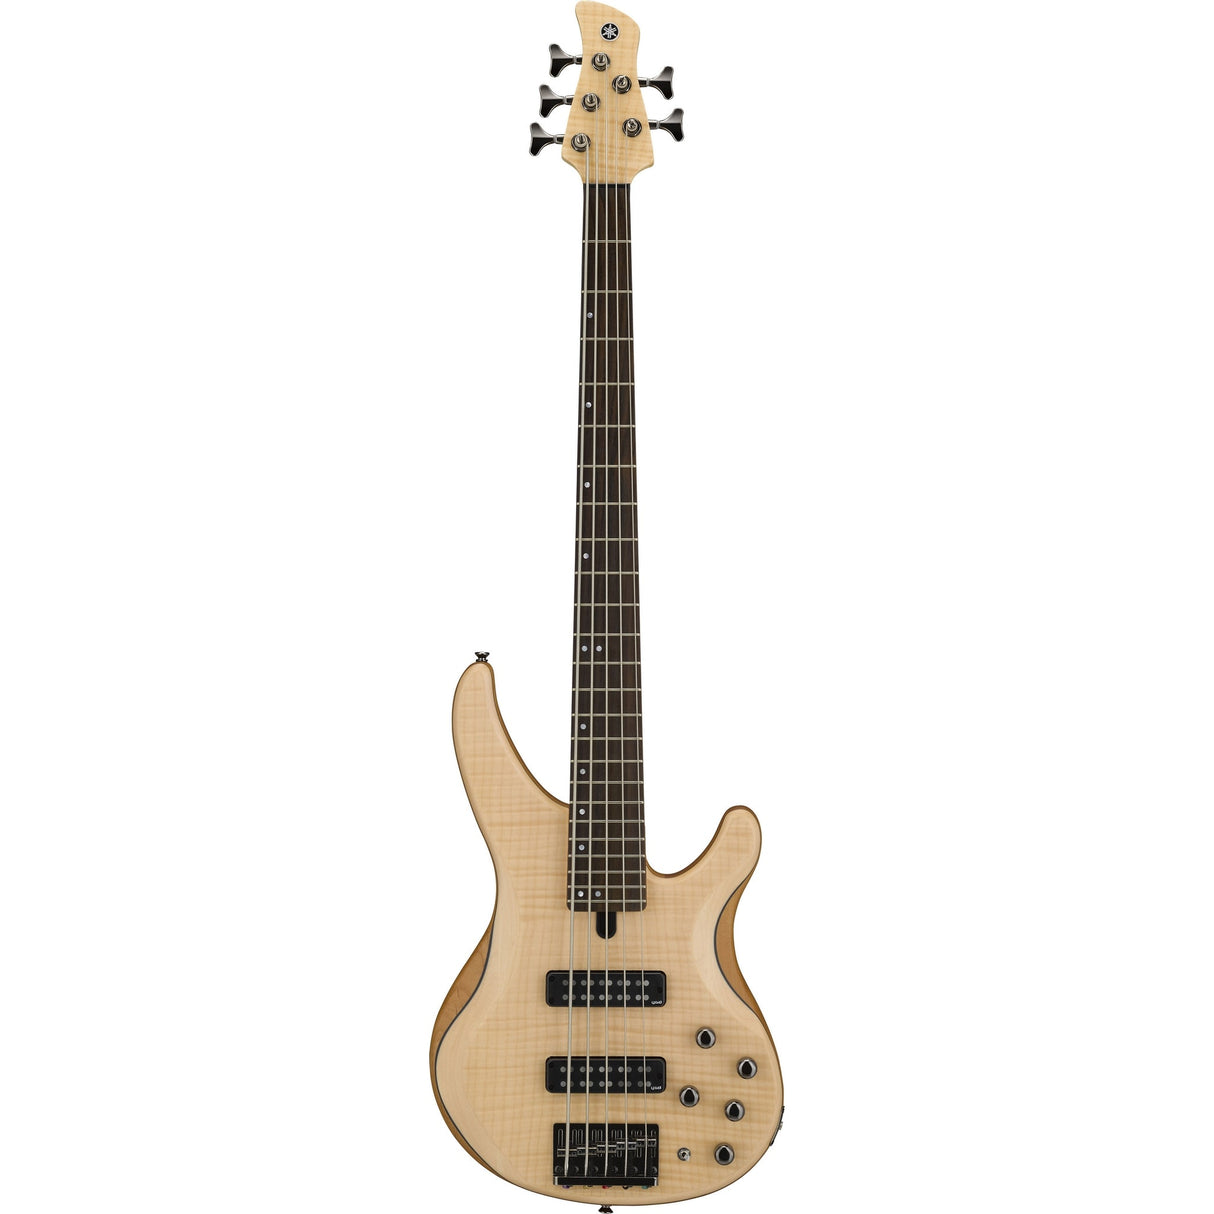 Yamaha TRBX605FM 5-String Alder/Maple Body Electric Bass Guitar